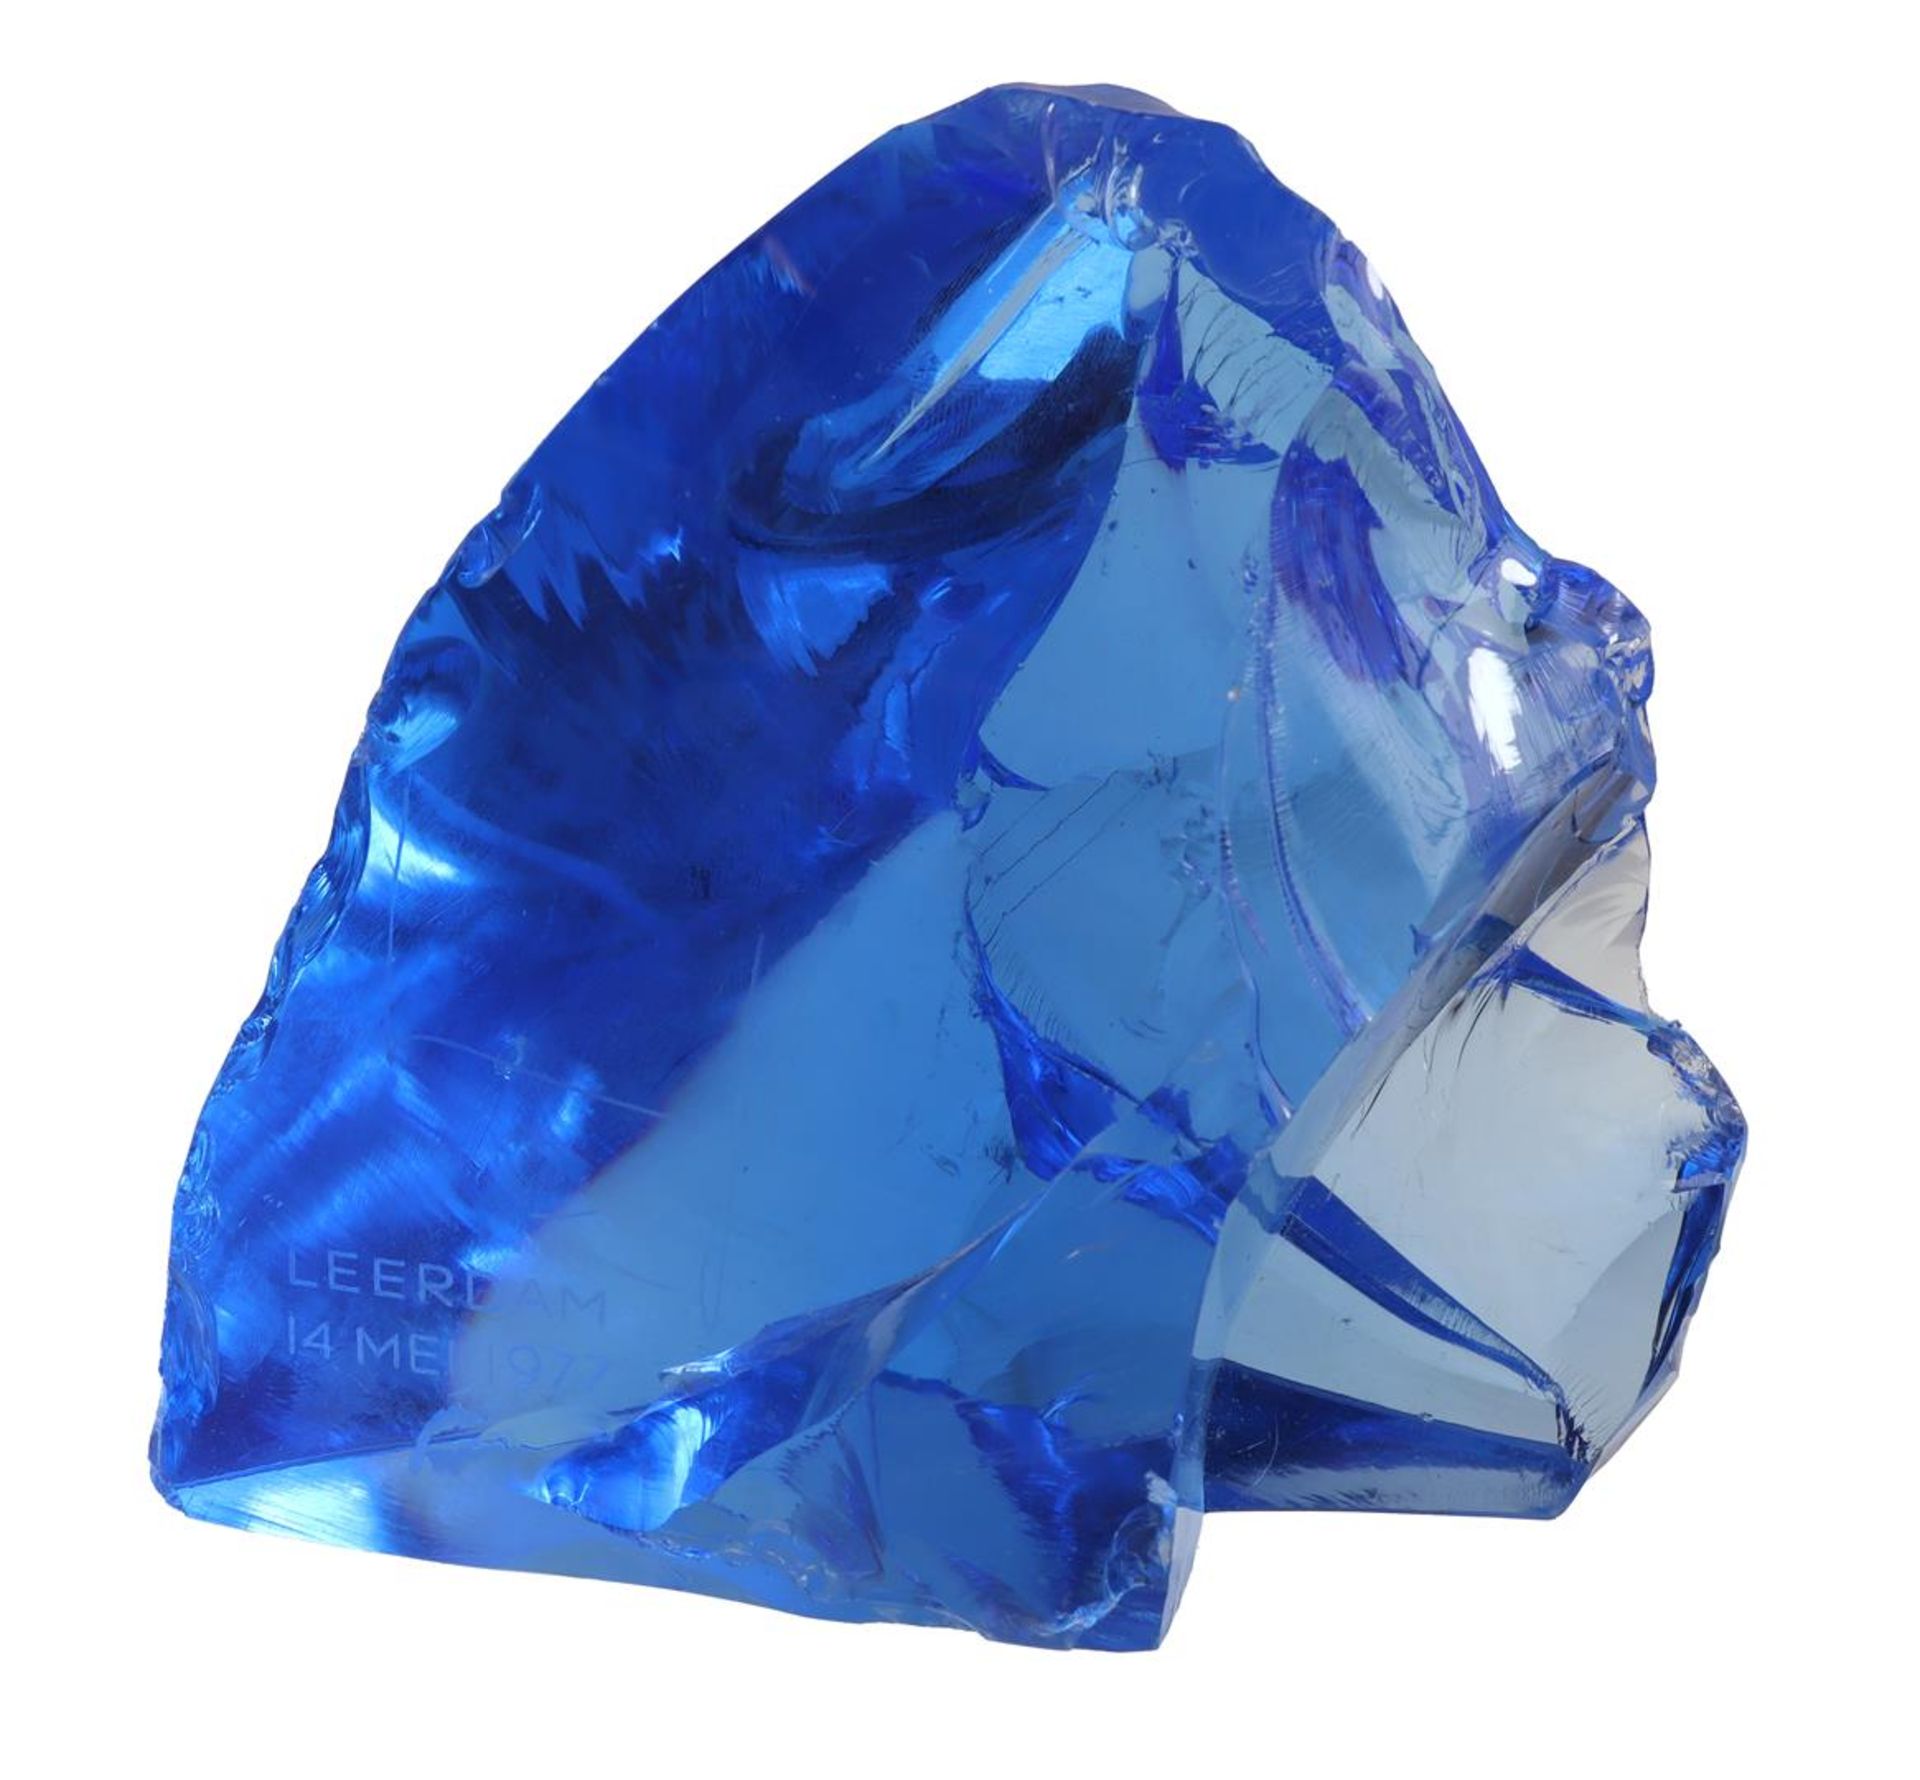 Leerdam blue glass object